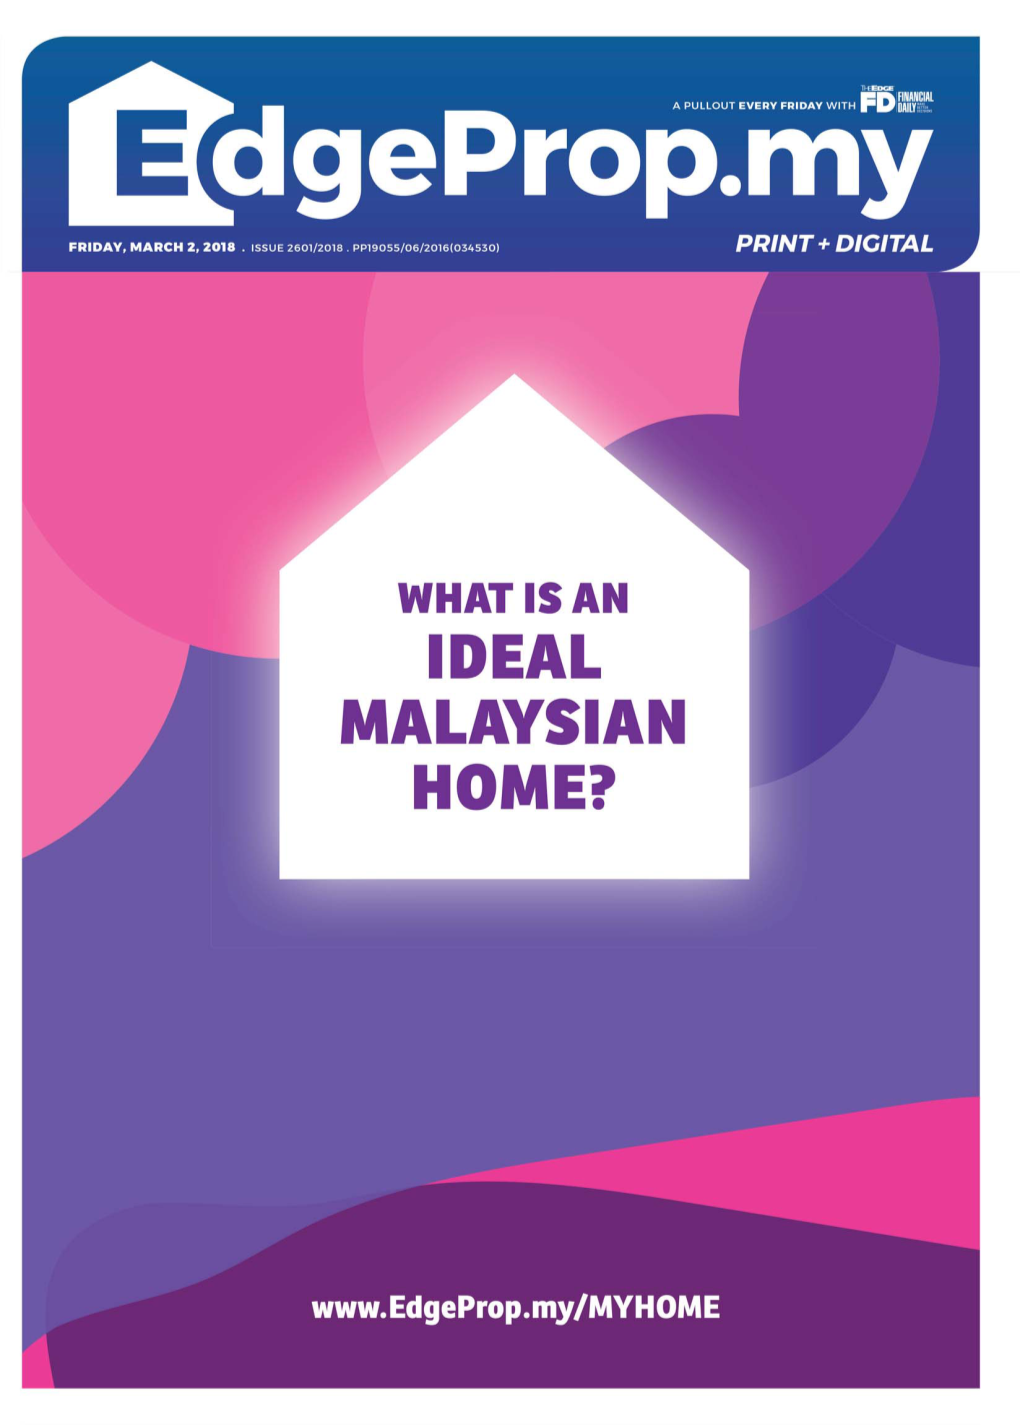 UEM Sunrise to Develop 'Next Mont'kiara' in Klang